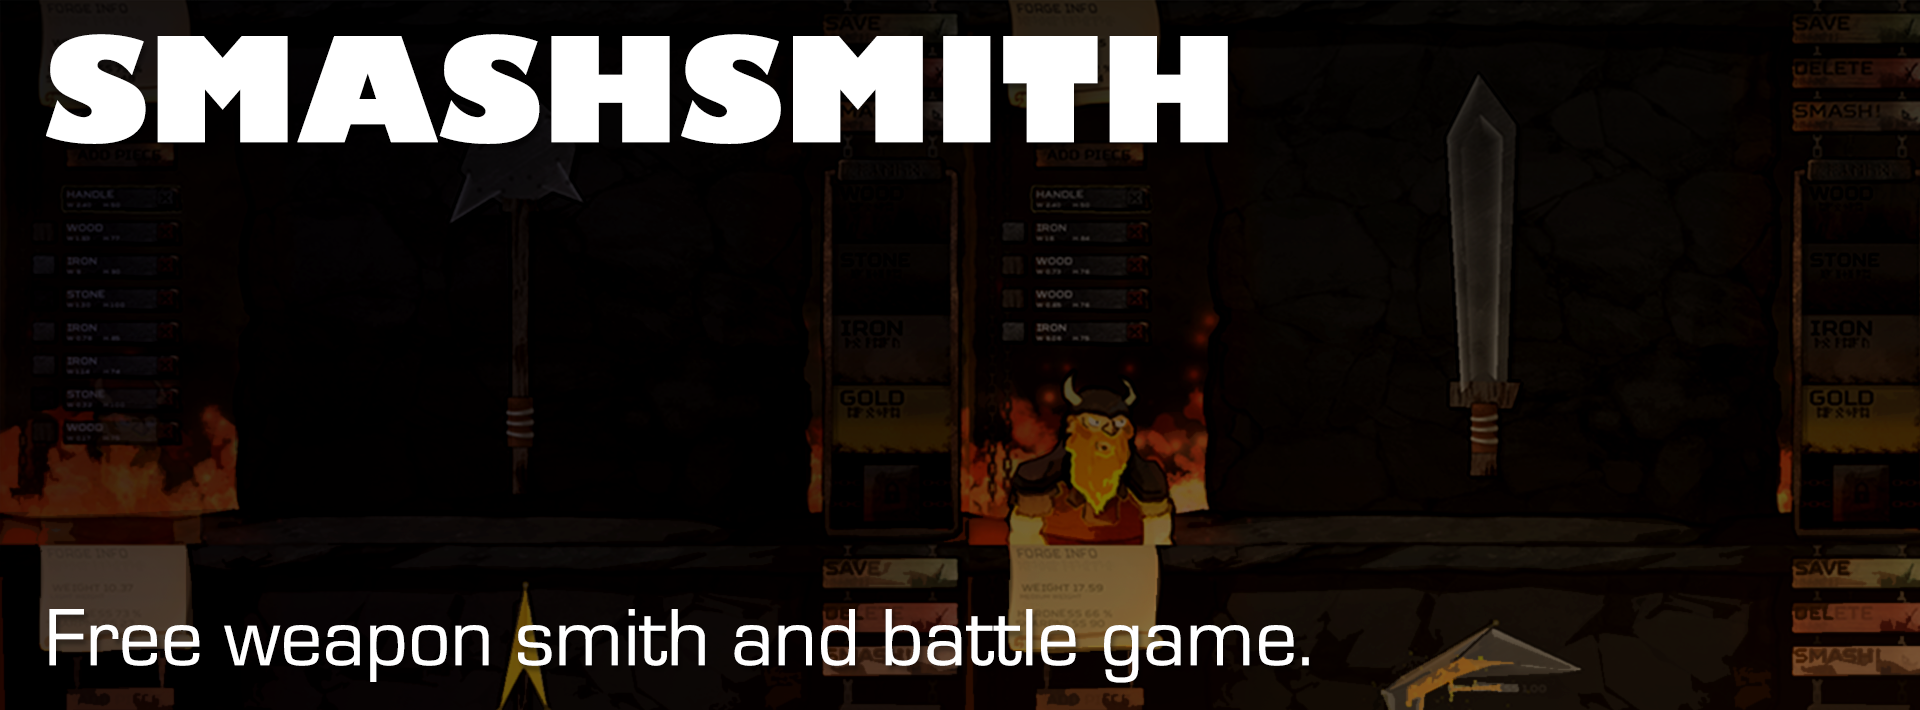 Smash Smith